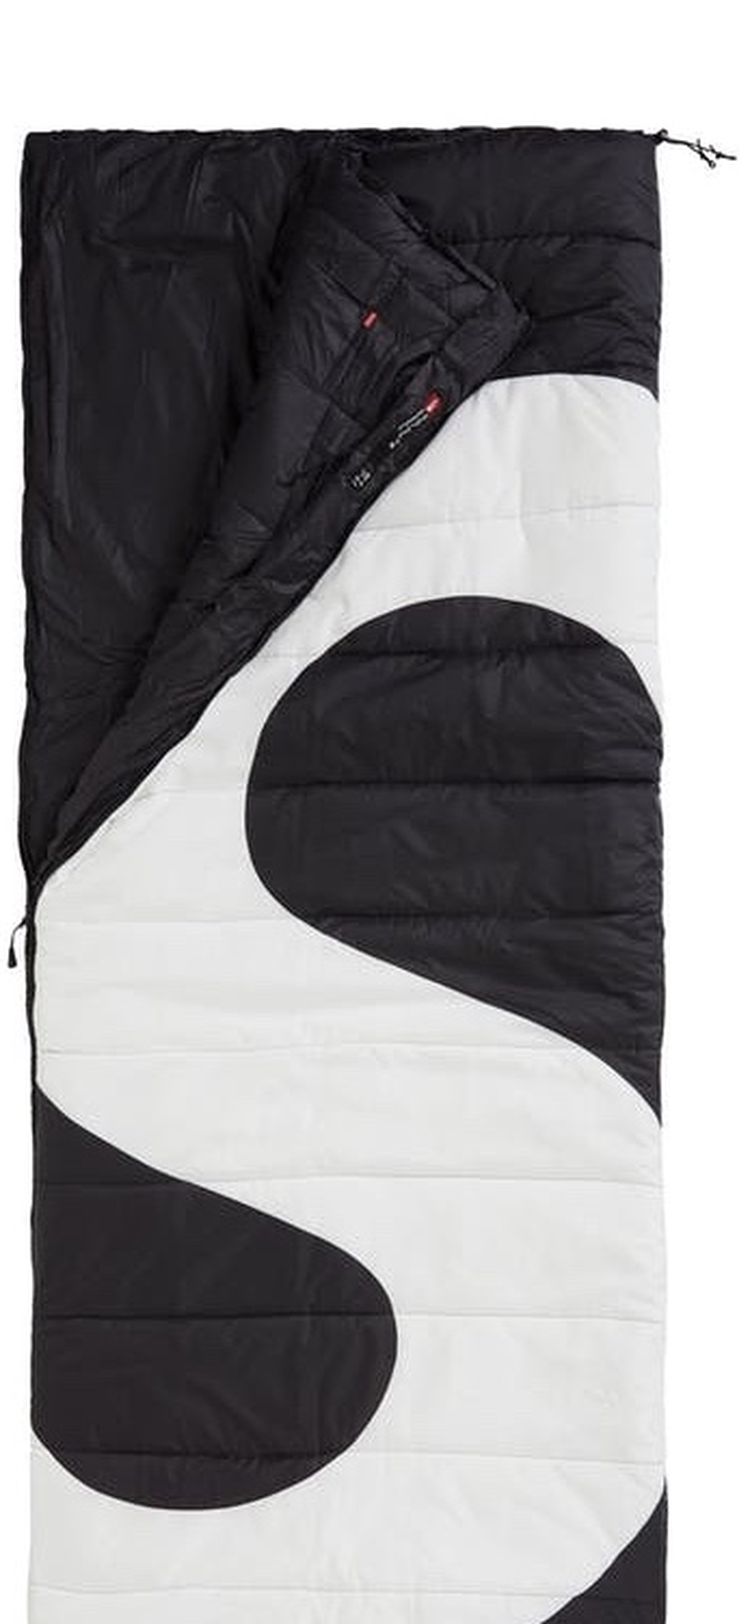 North Face x Supreme sleeping bag